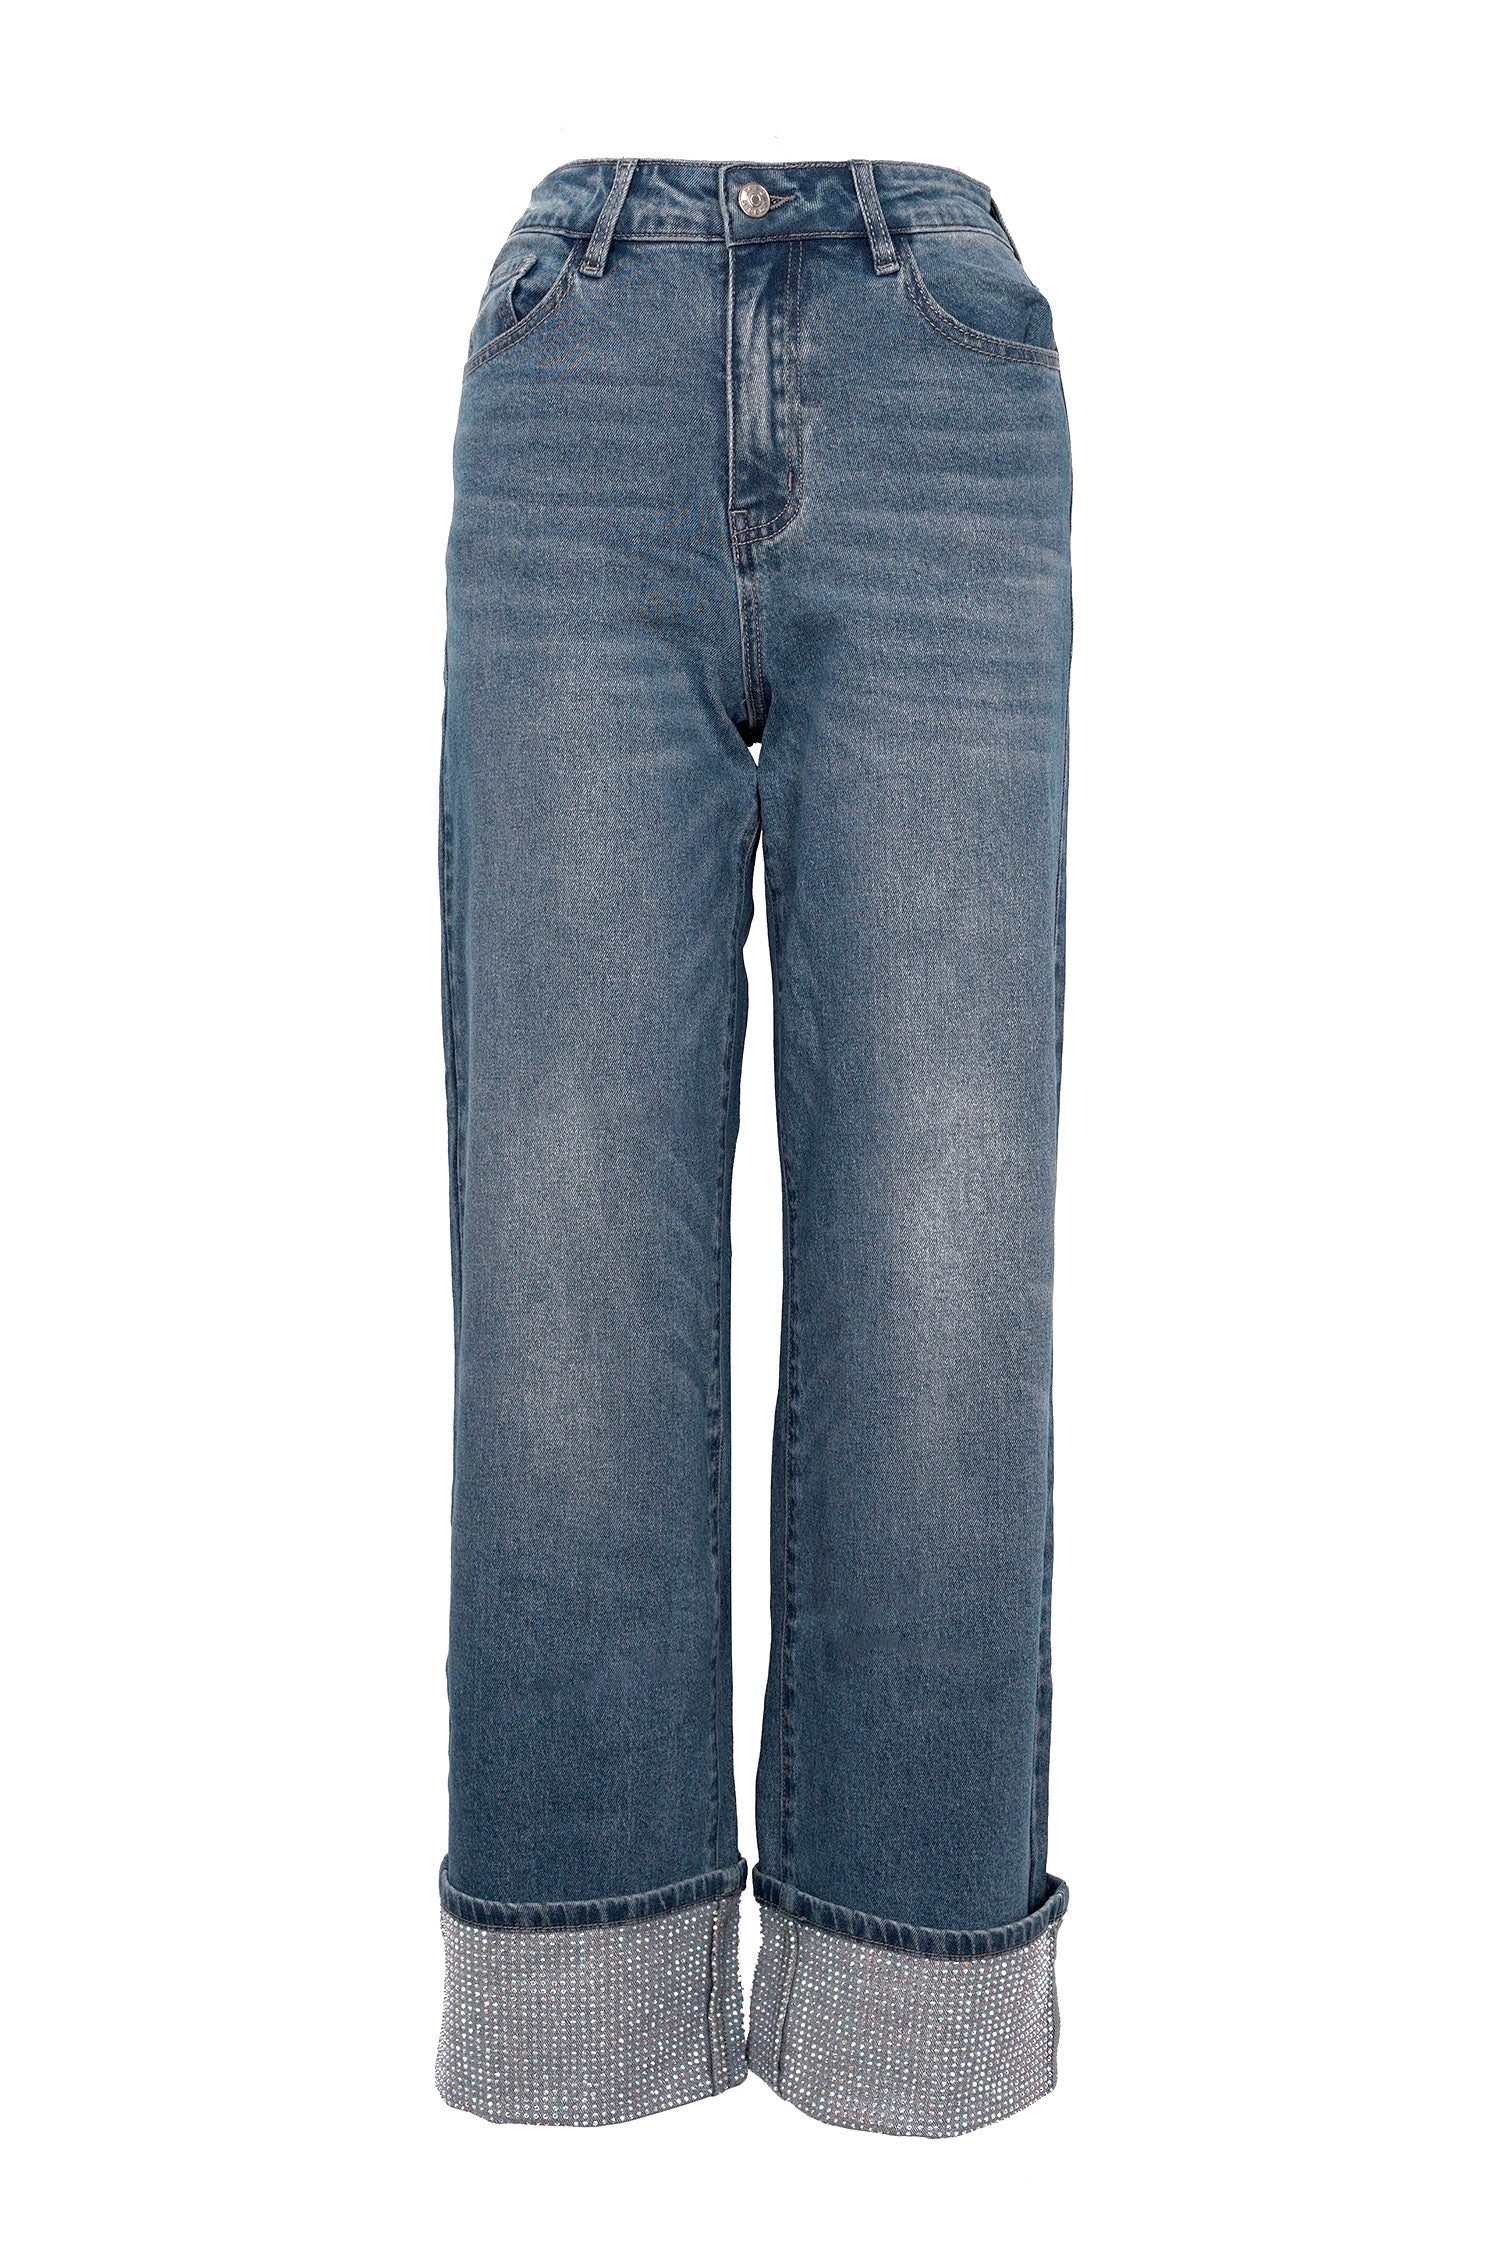 UrbanOG - Deloris Rhinestone Coated Washed Denim Jeans - PANTS